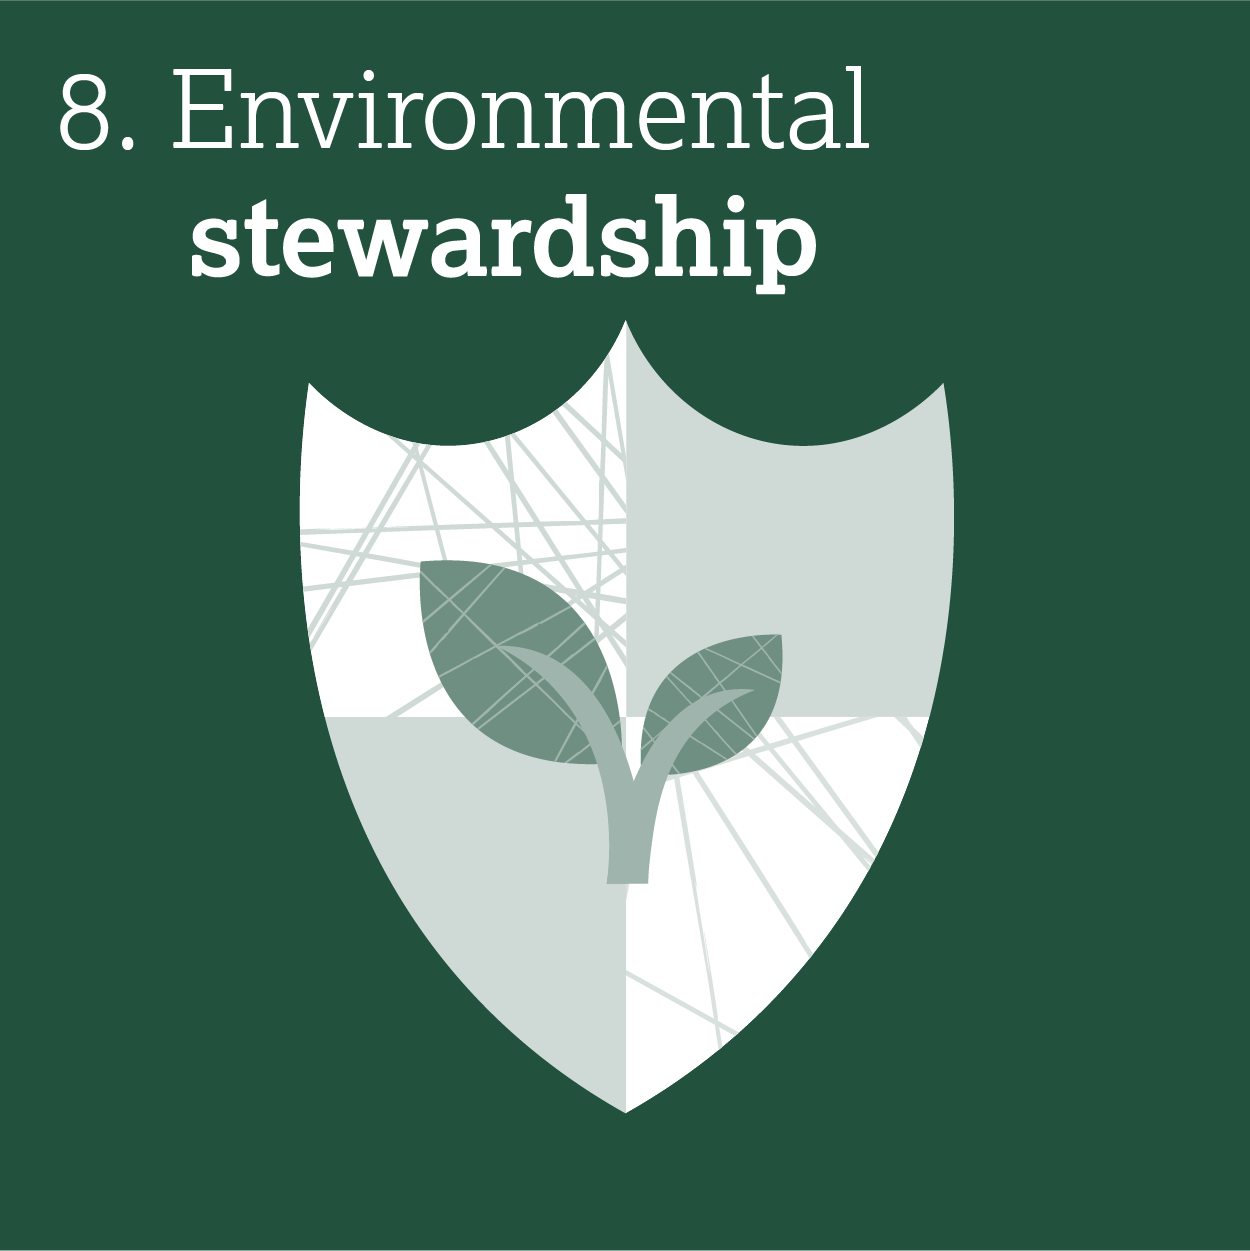 8. Environmental stewardship